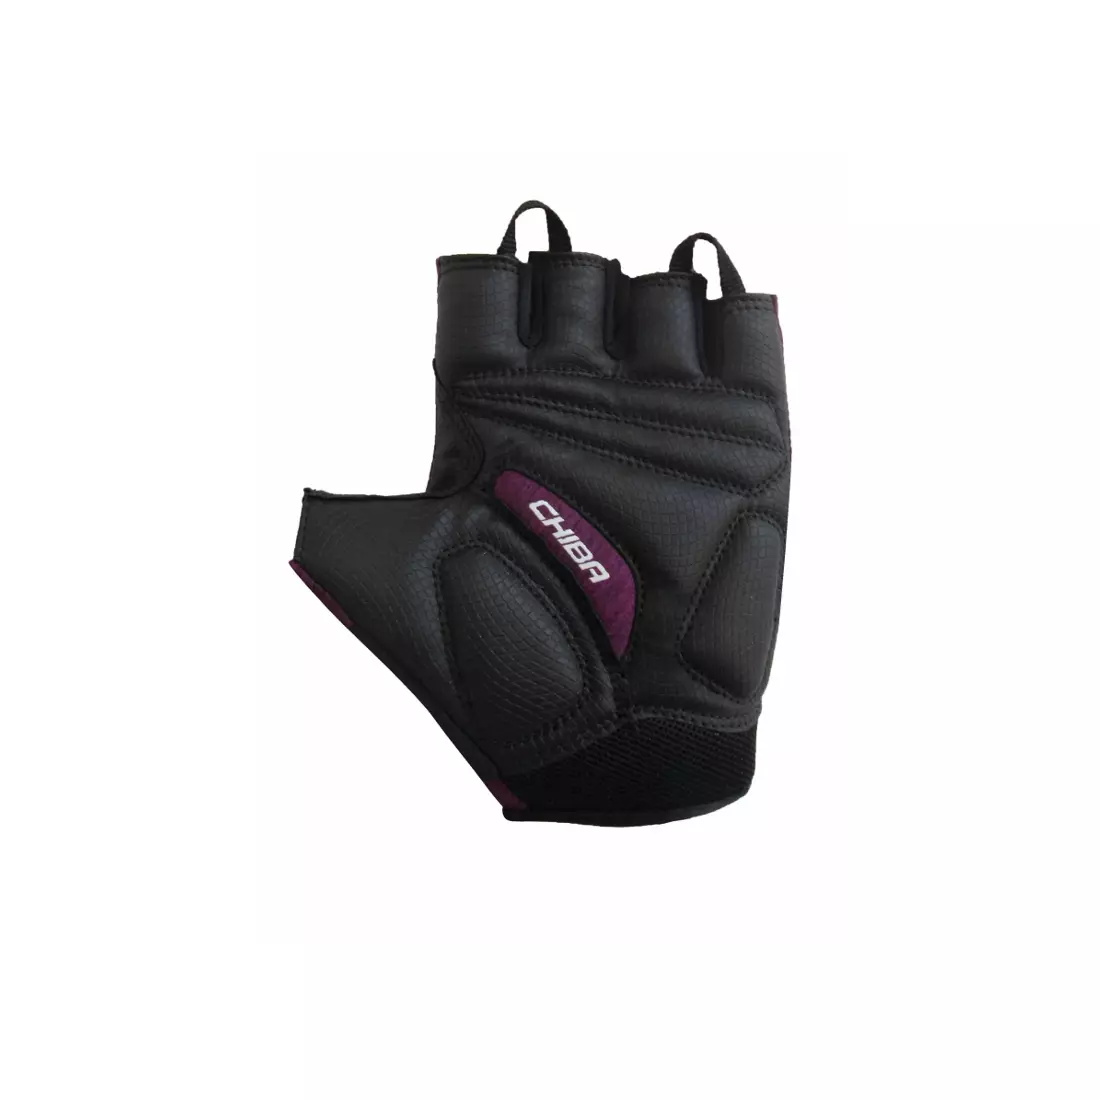 CHIBA LADY SUPER LIGHT women's cycling gloves, purple